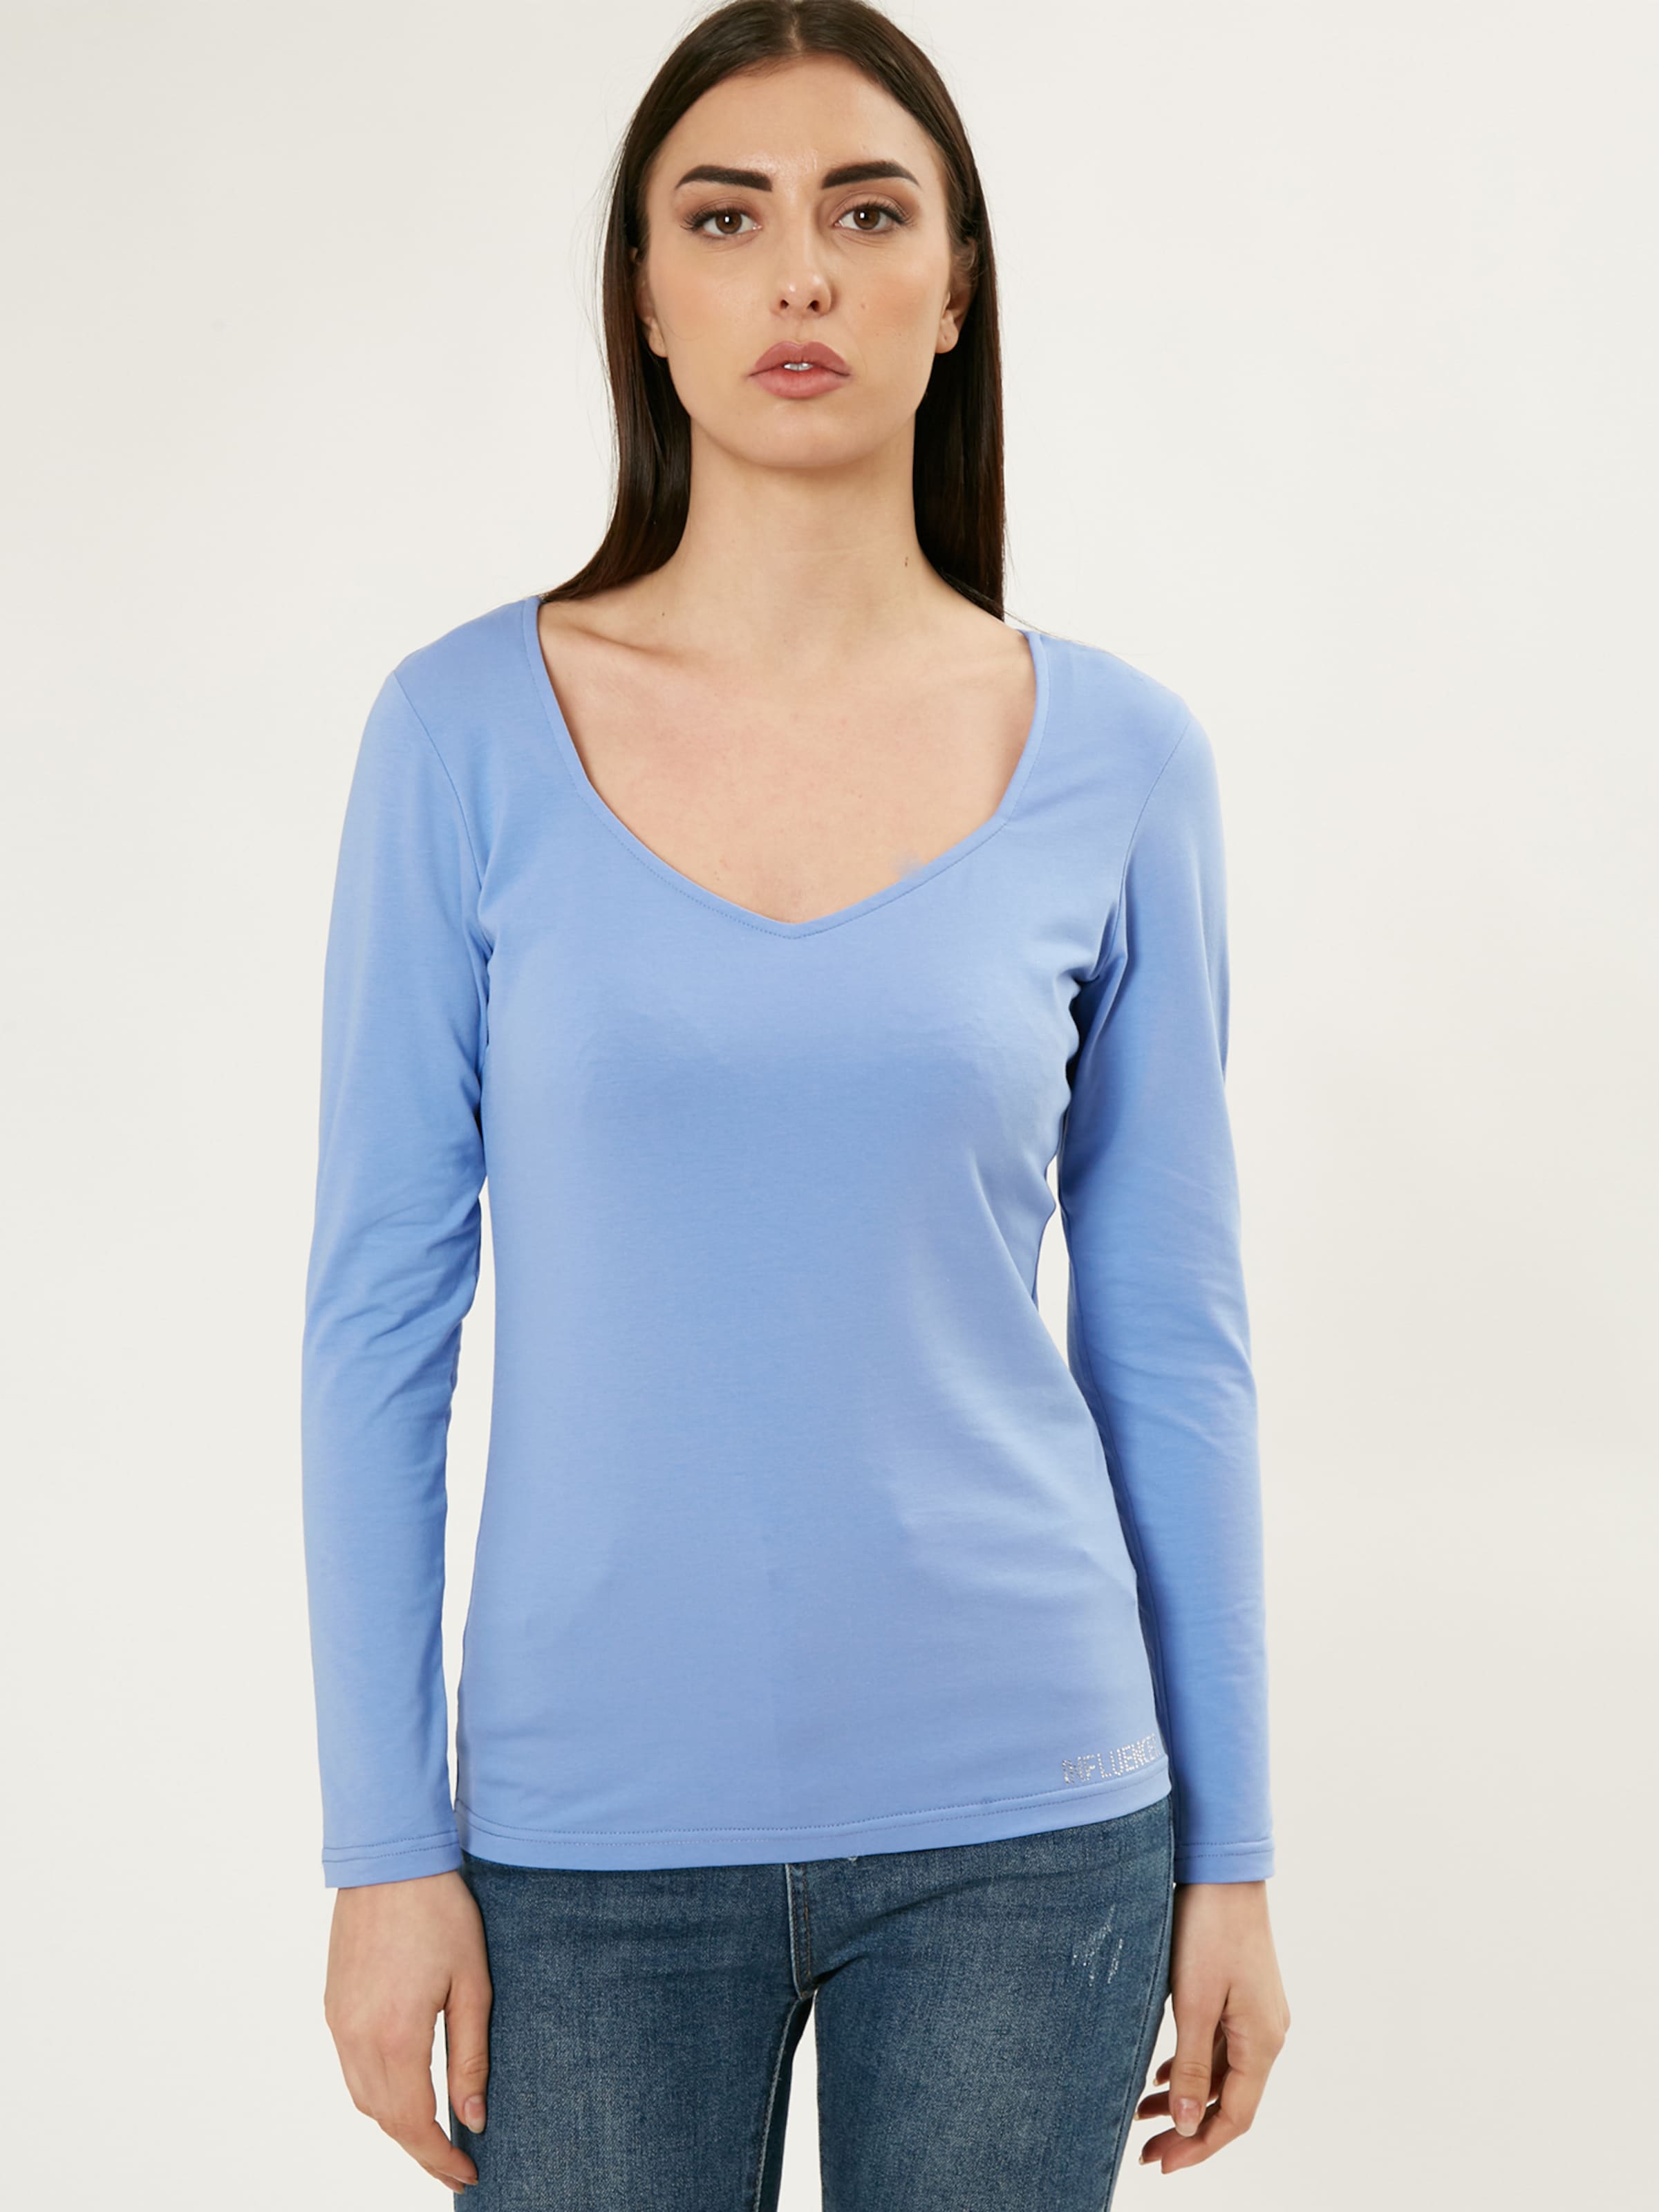 Gray/Silver S SKFK T-shirt discount 70% Skunkfunk WOMEN FASHION Shirts & T-shirts T-shirt Basic 